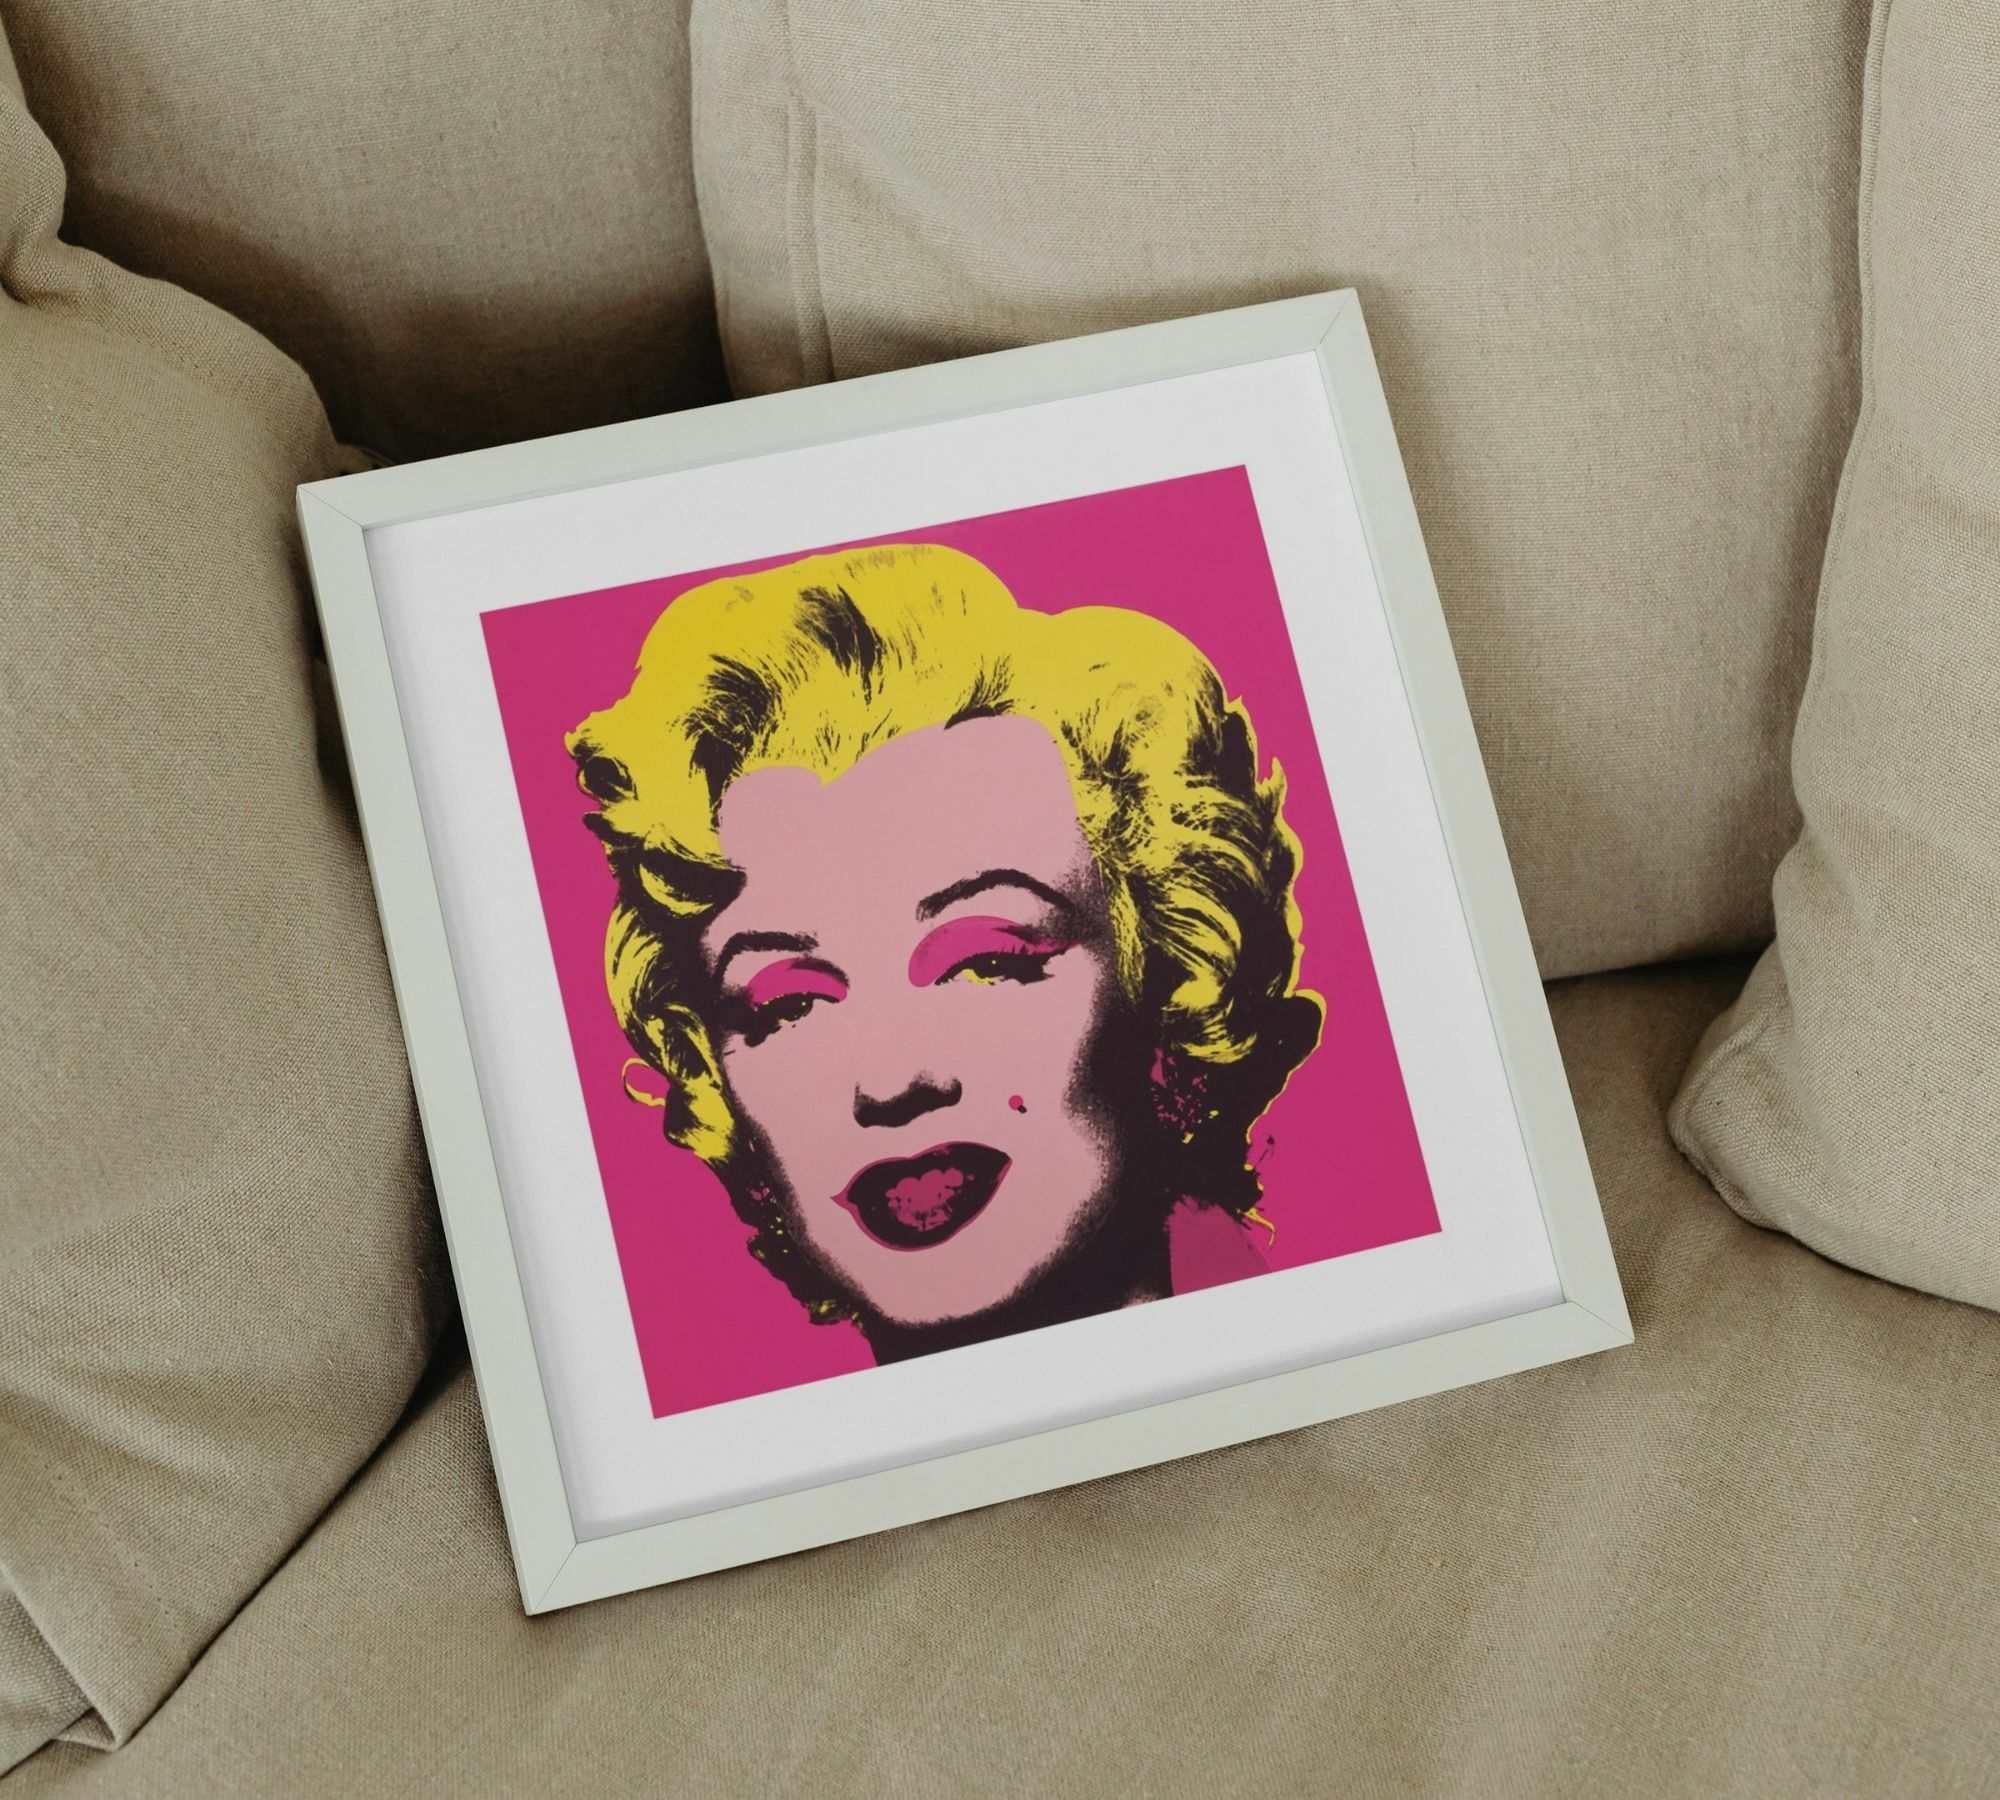 Marilyn Monroe (Hot Pink), 1967 - Andy Warhol 40 x 40 cm 5